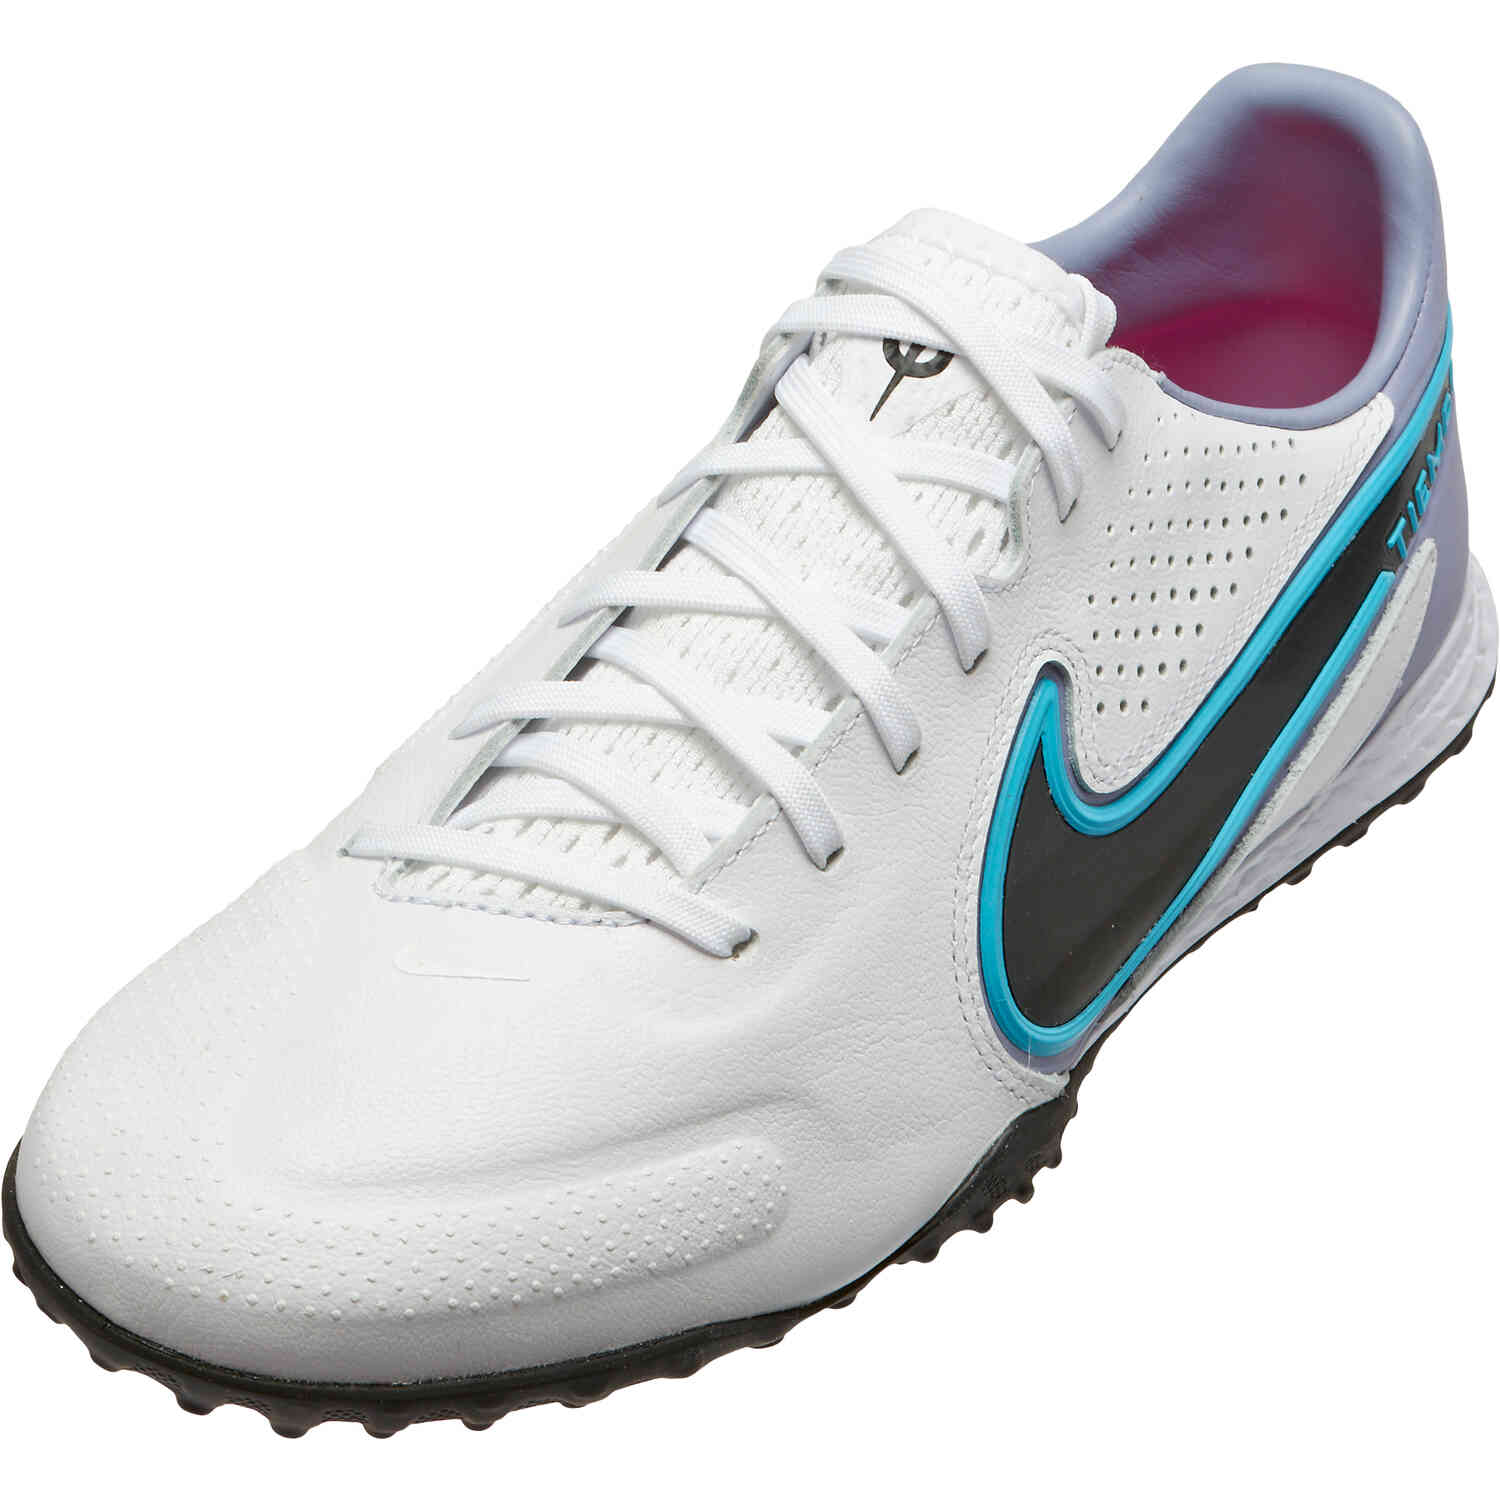 Nike Tiempo Legend 9 Pro TF Turf Soccer Shoes - White, Baltic Blue, Blast & Black - Soccer Master